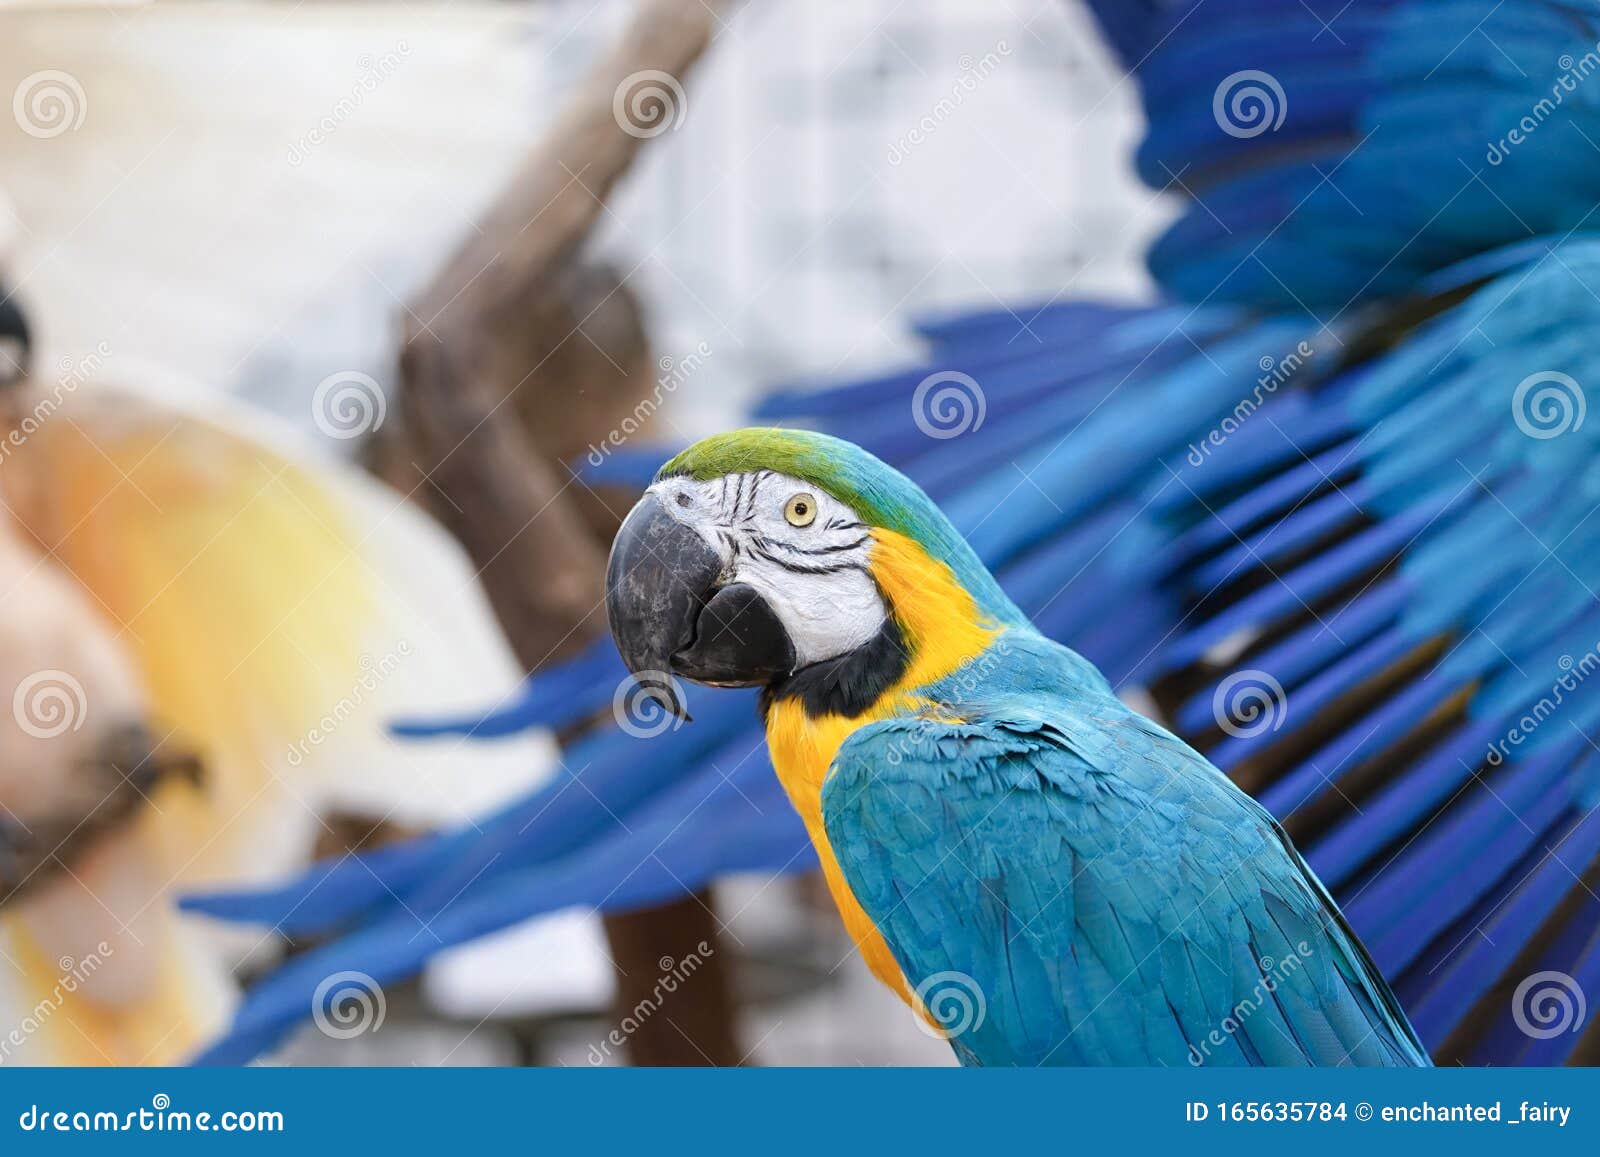 Попугай Фото Животного